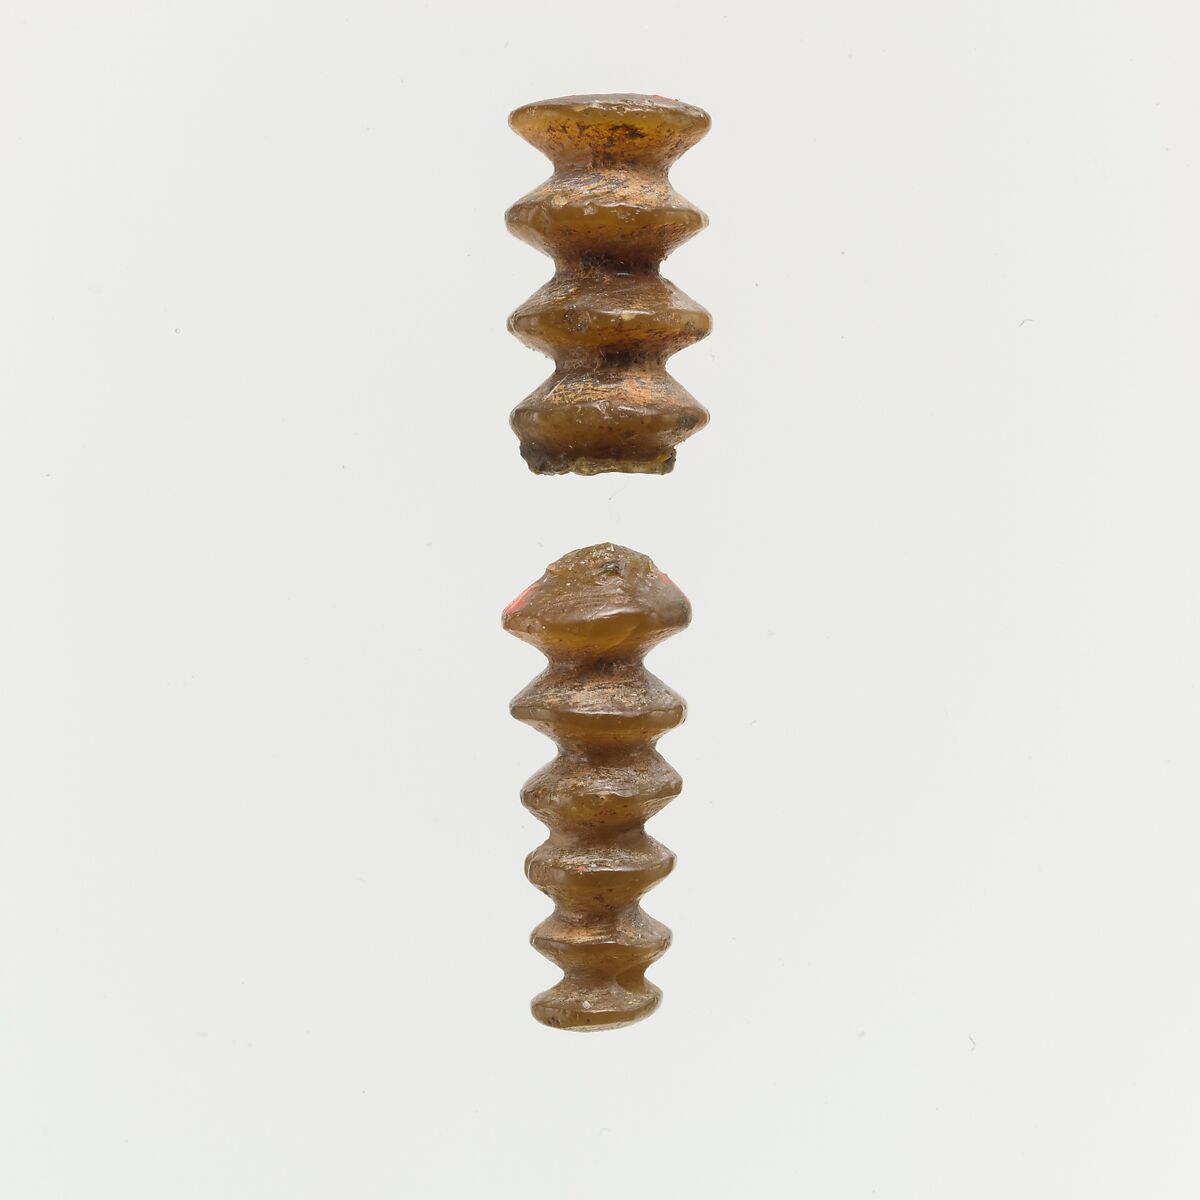 Serpentine (?) pendant fragments with transverse grooves, Serpentine?, Minoan 